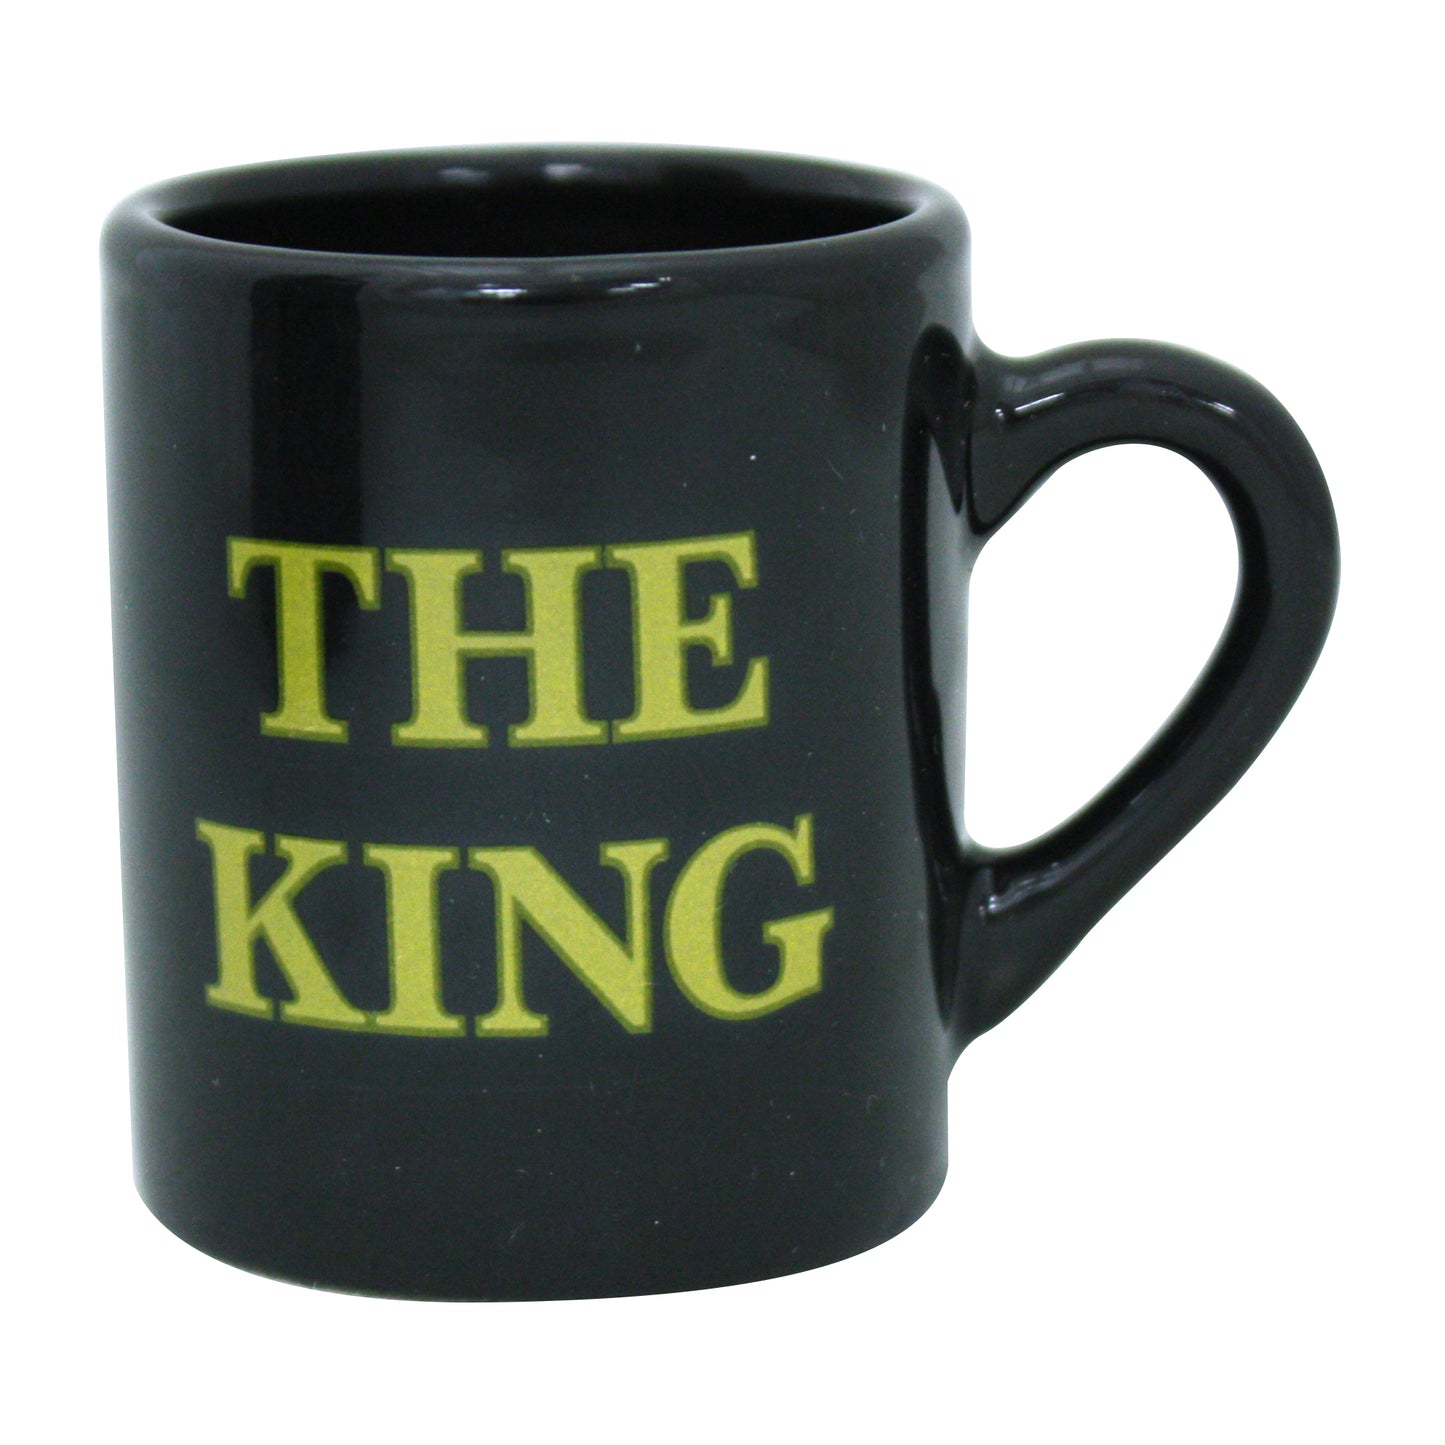 The King Mug Shot